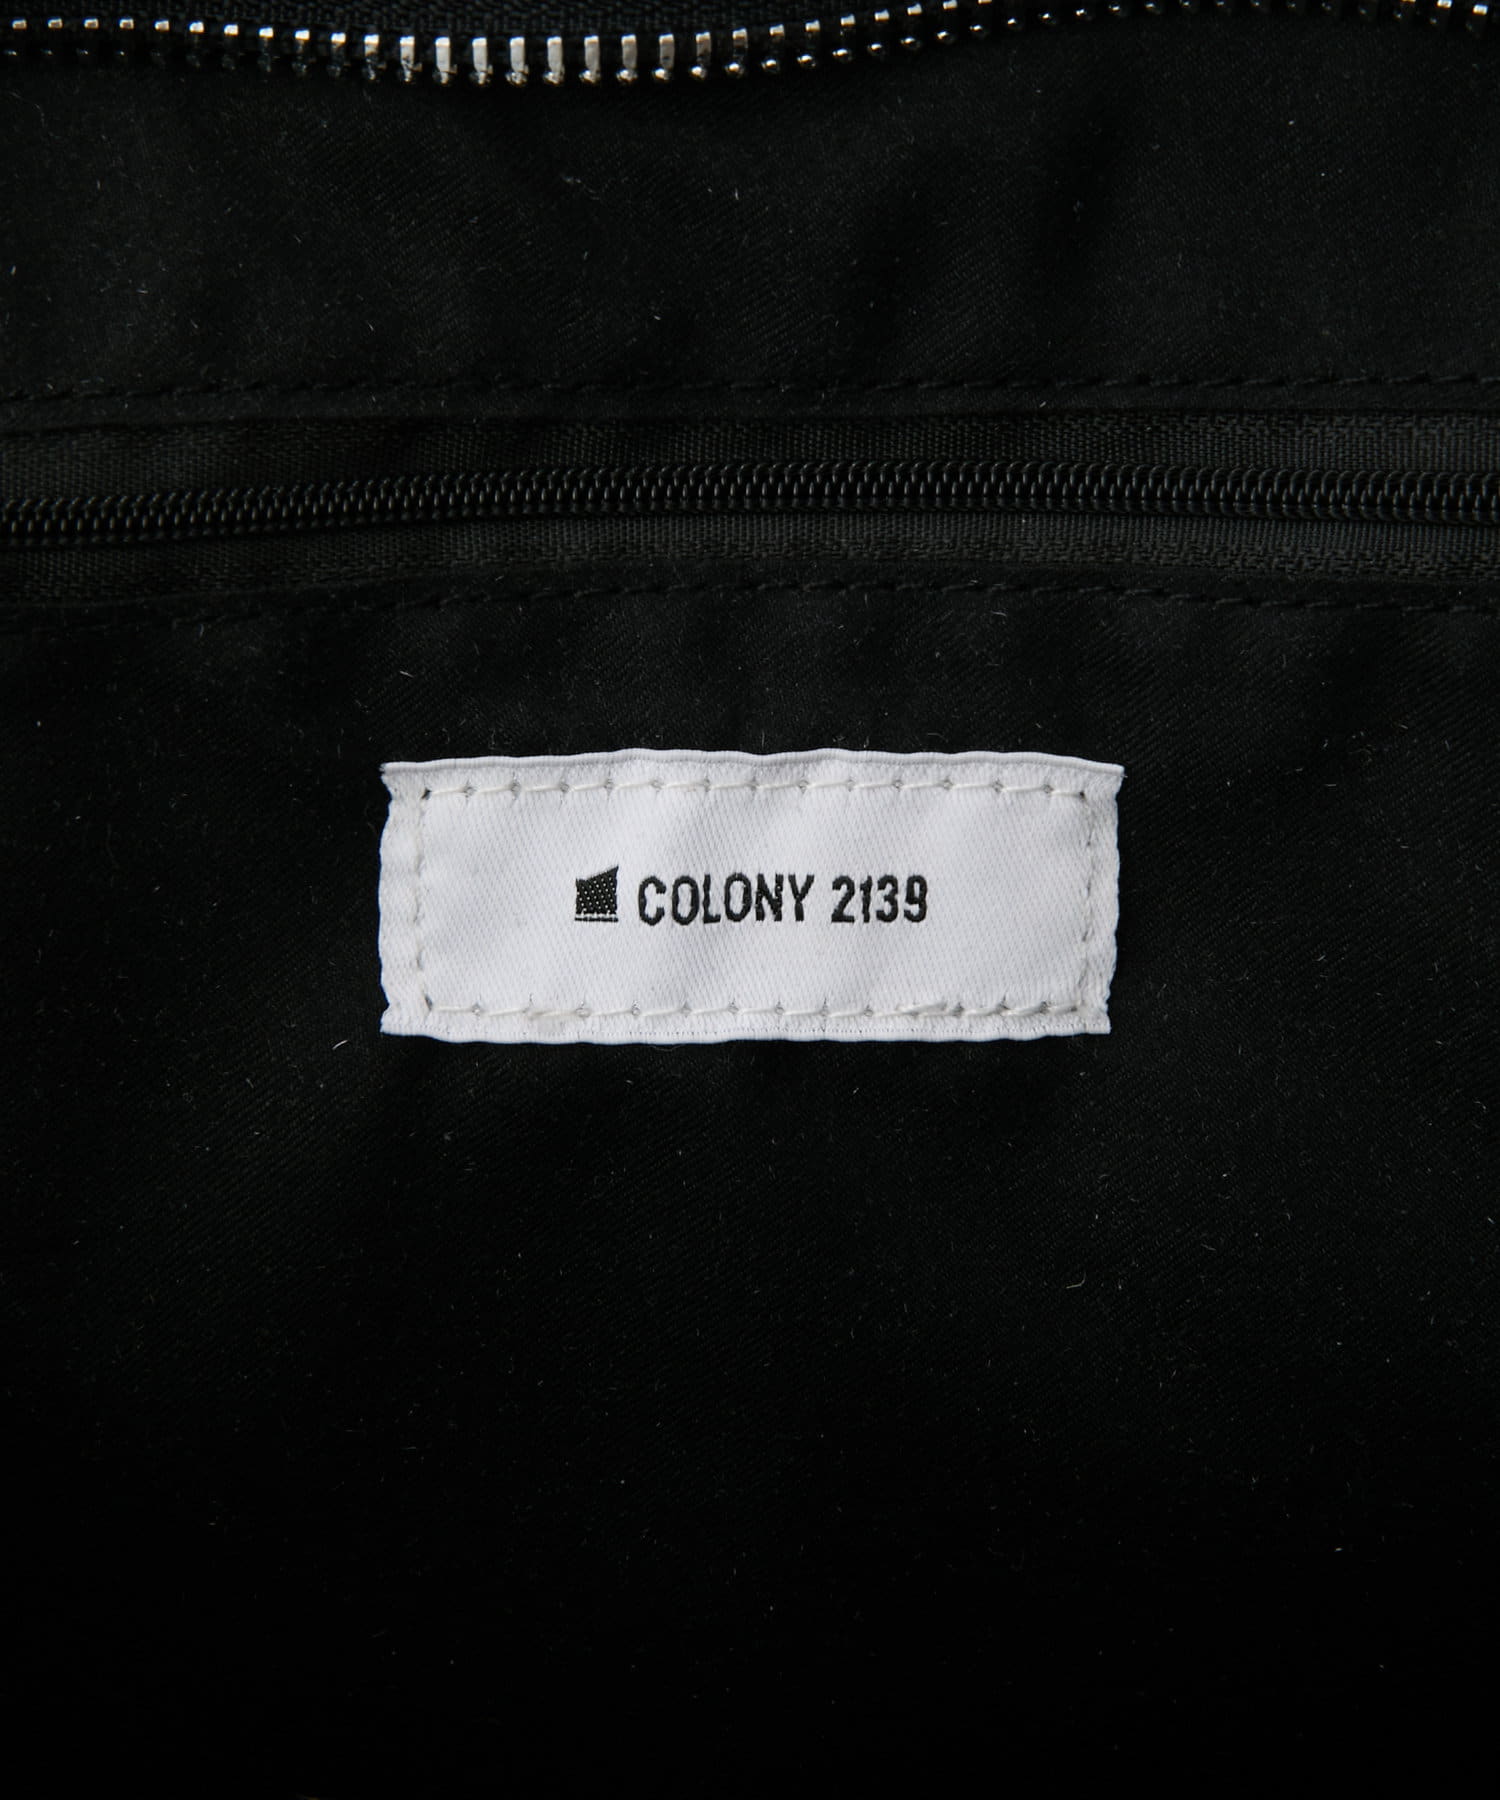 COLONY 2139(コロニー トゥーワンスリーナイン) ユーティリティアウトポケットバッグ